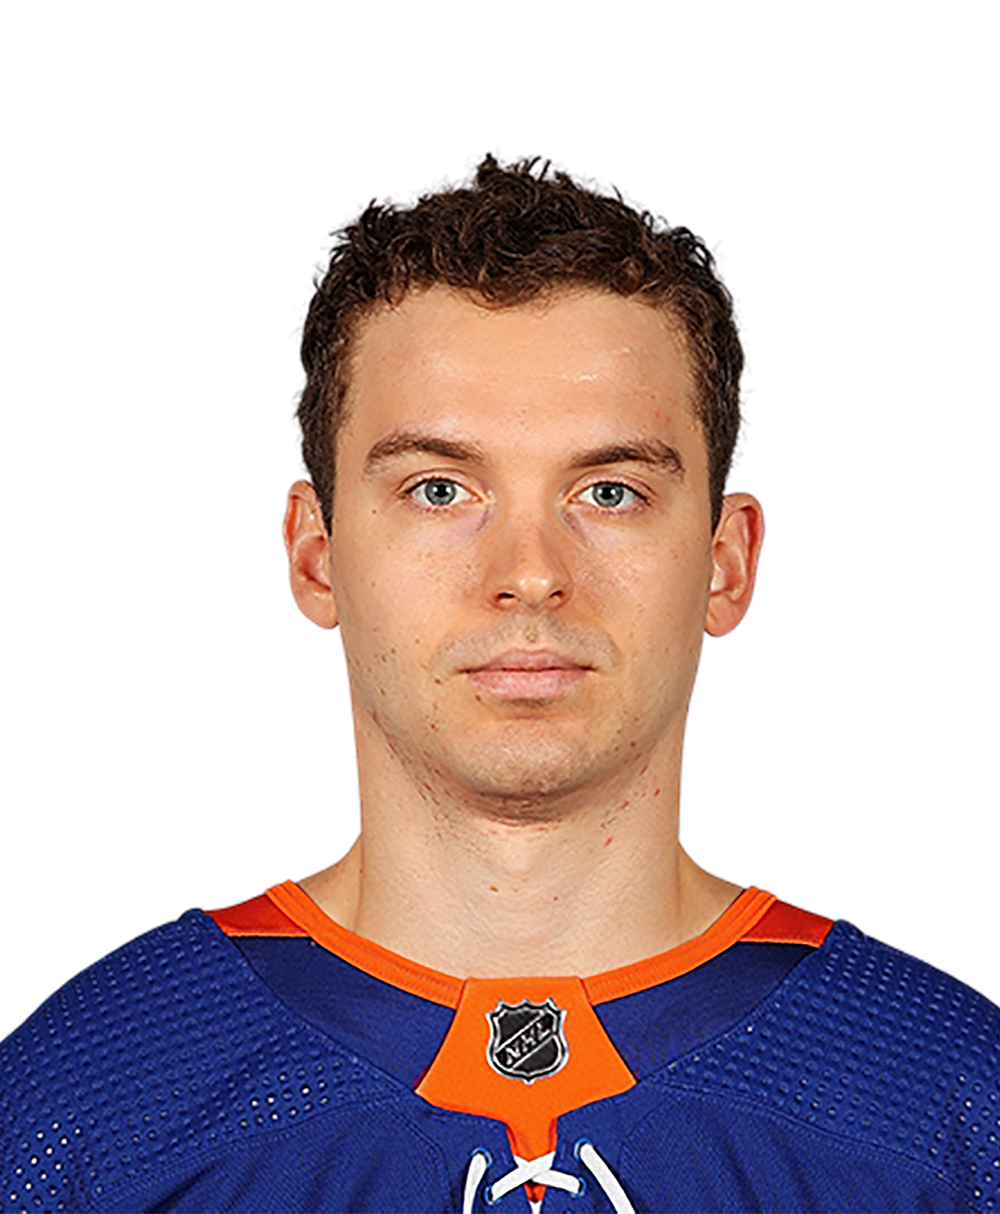 Ilya Sorokin Stats, Profile, Bio, Analysis and More, New York Islanders